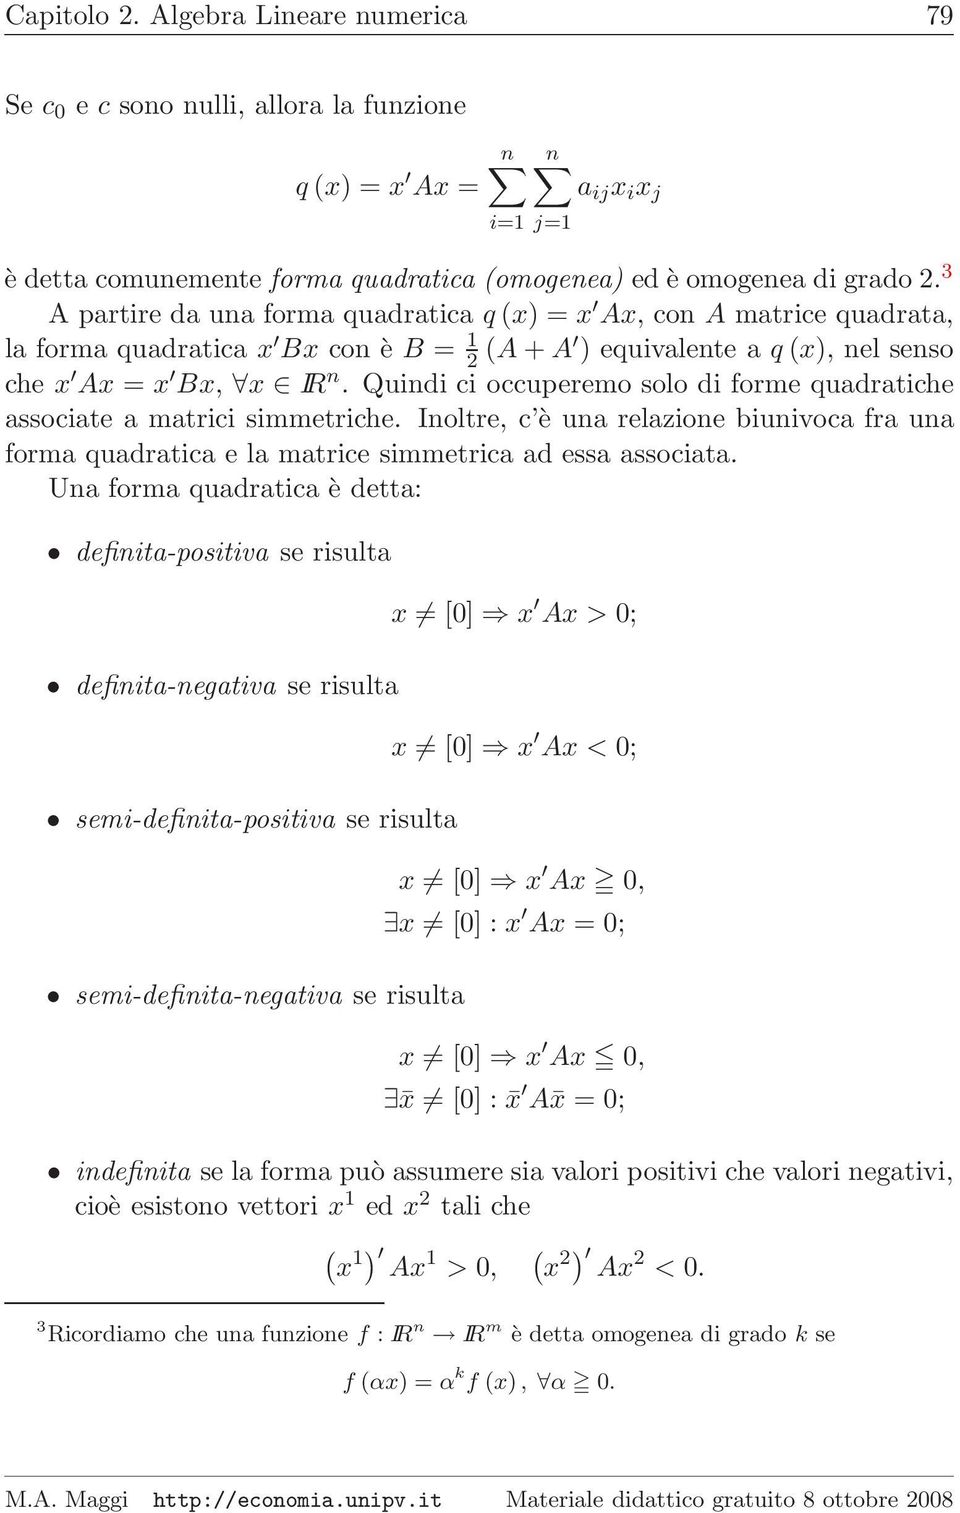 Capitolo 2 Algebra Lineare Numerica 79 A Ij X I X J Pdf